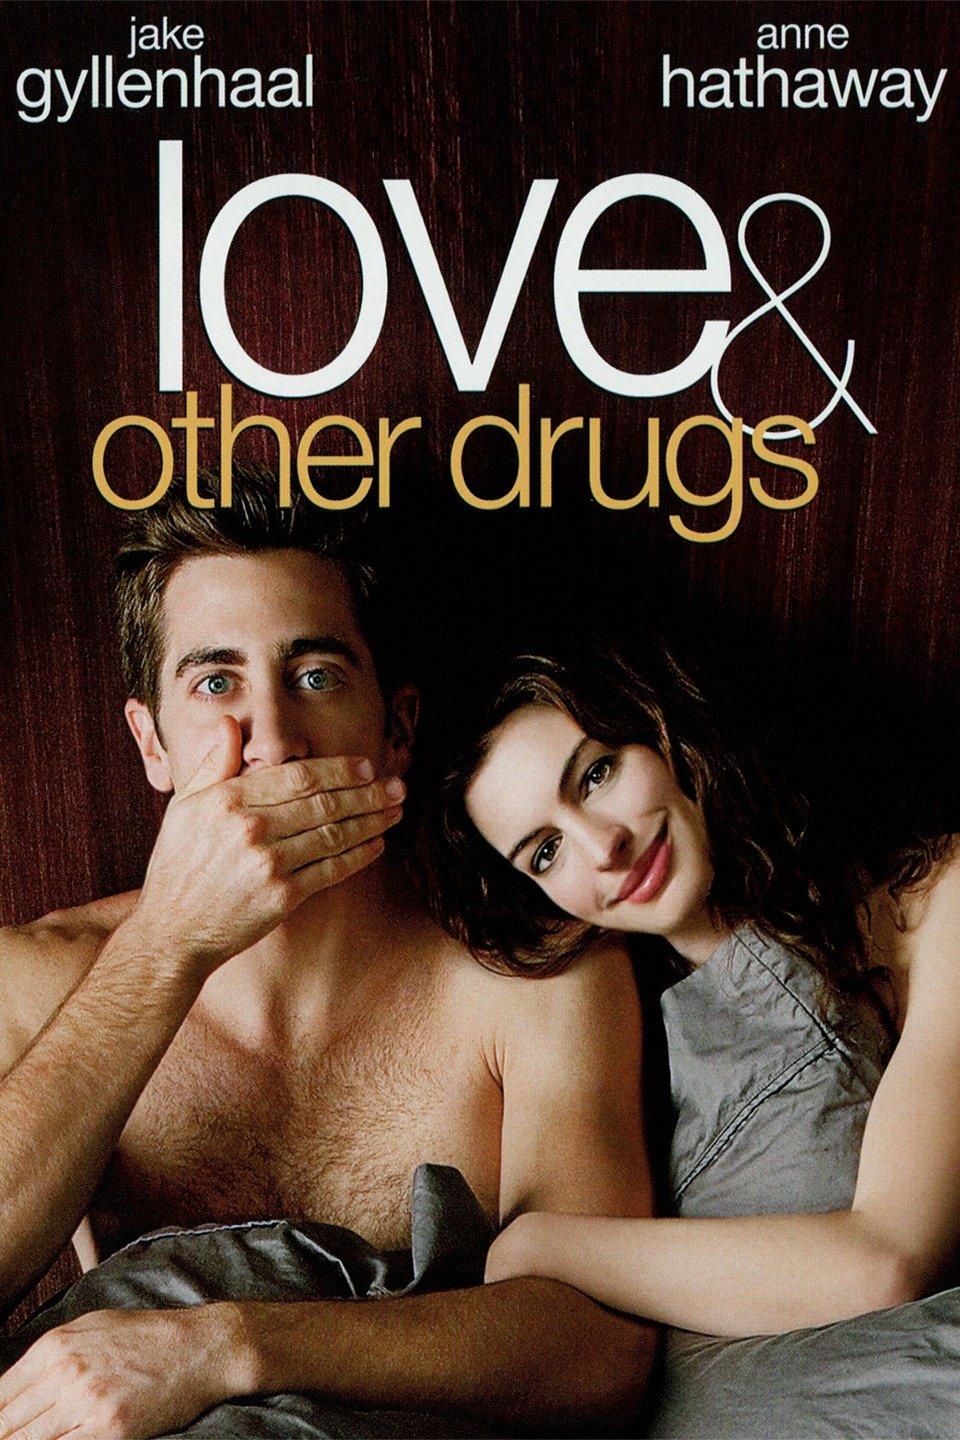 [MINI Super-HQ] Love and Other Drugs (2010) ยาวิเศษที่ไม่อาจรักษารัก [1080p] [พากย์ไทย 5.1 + เสียงอังกฤษ DTS] [บรรยายไทย + อังกฤษ] [เสียงไทย + ซับไทย] [PANDAFILE]